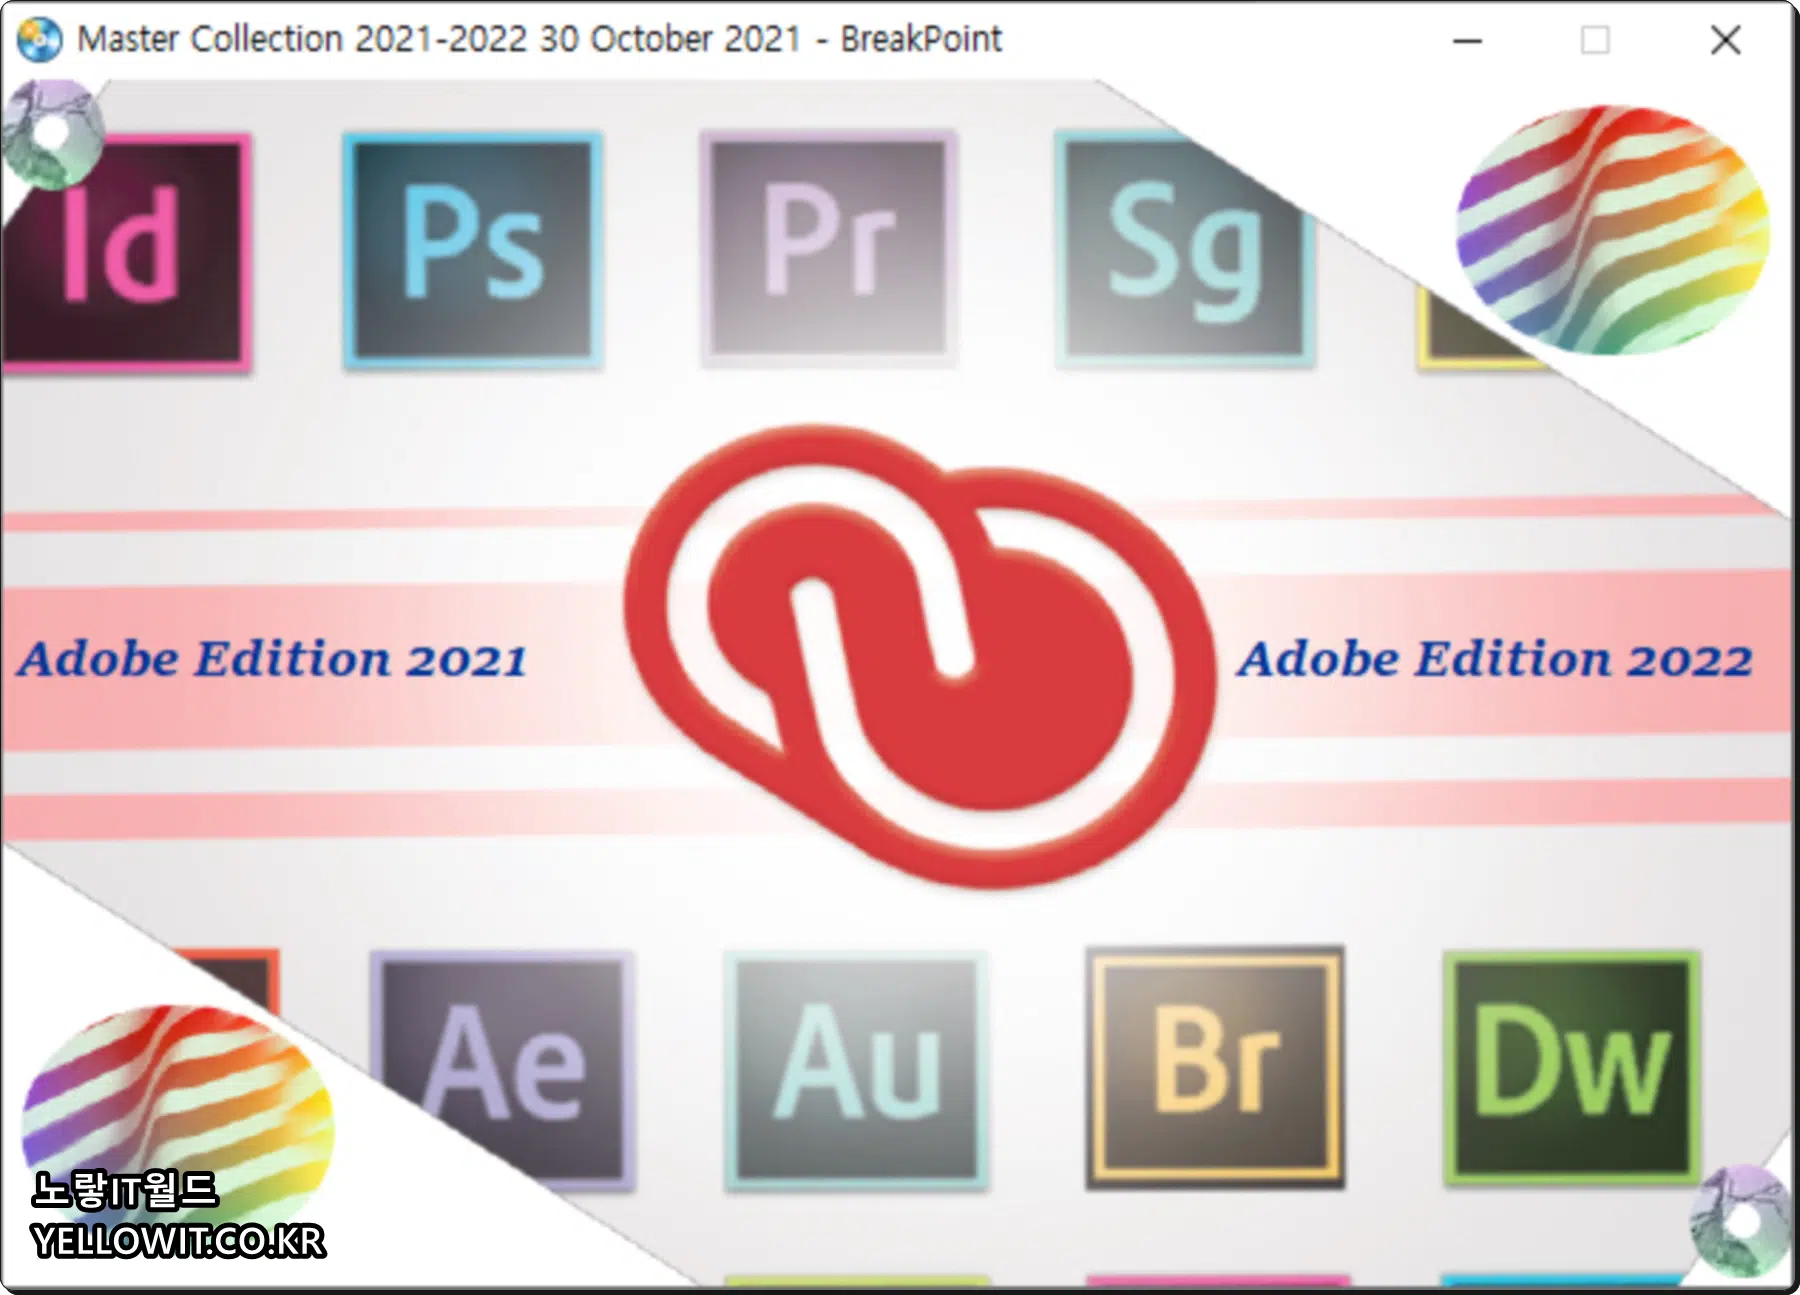 Adobe Master Collection 2022 다운로드 정품인증 2